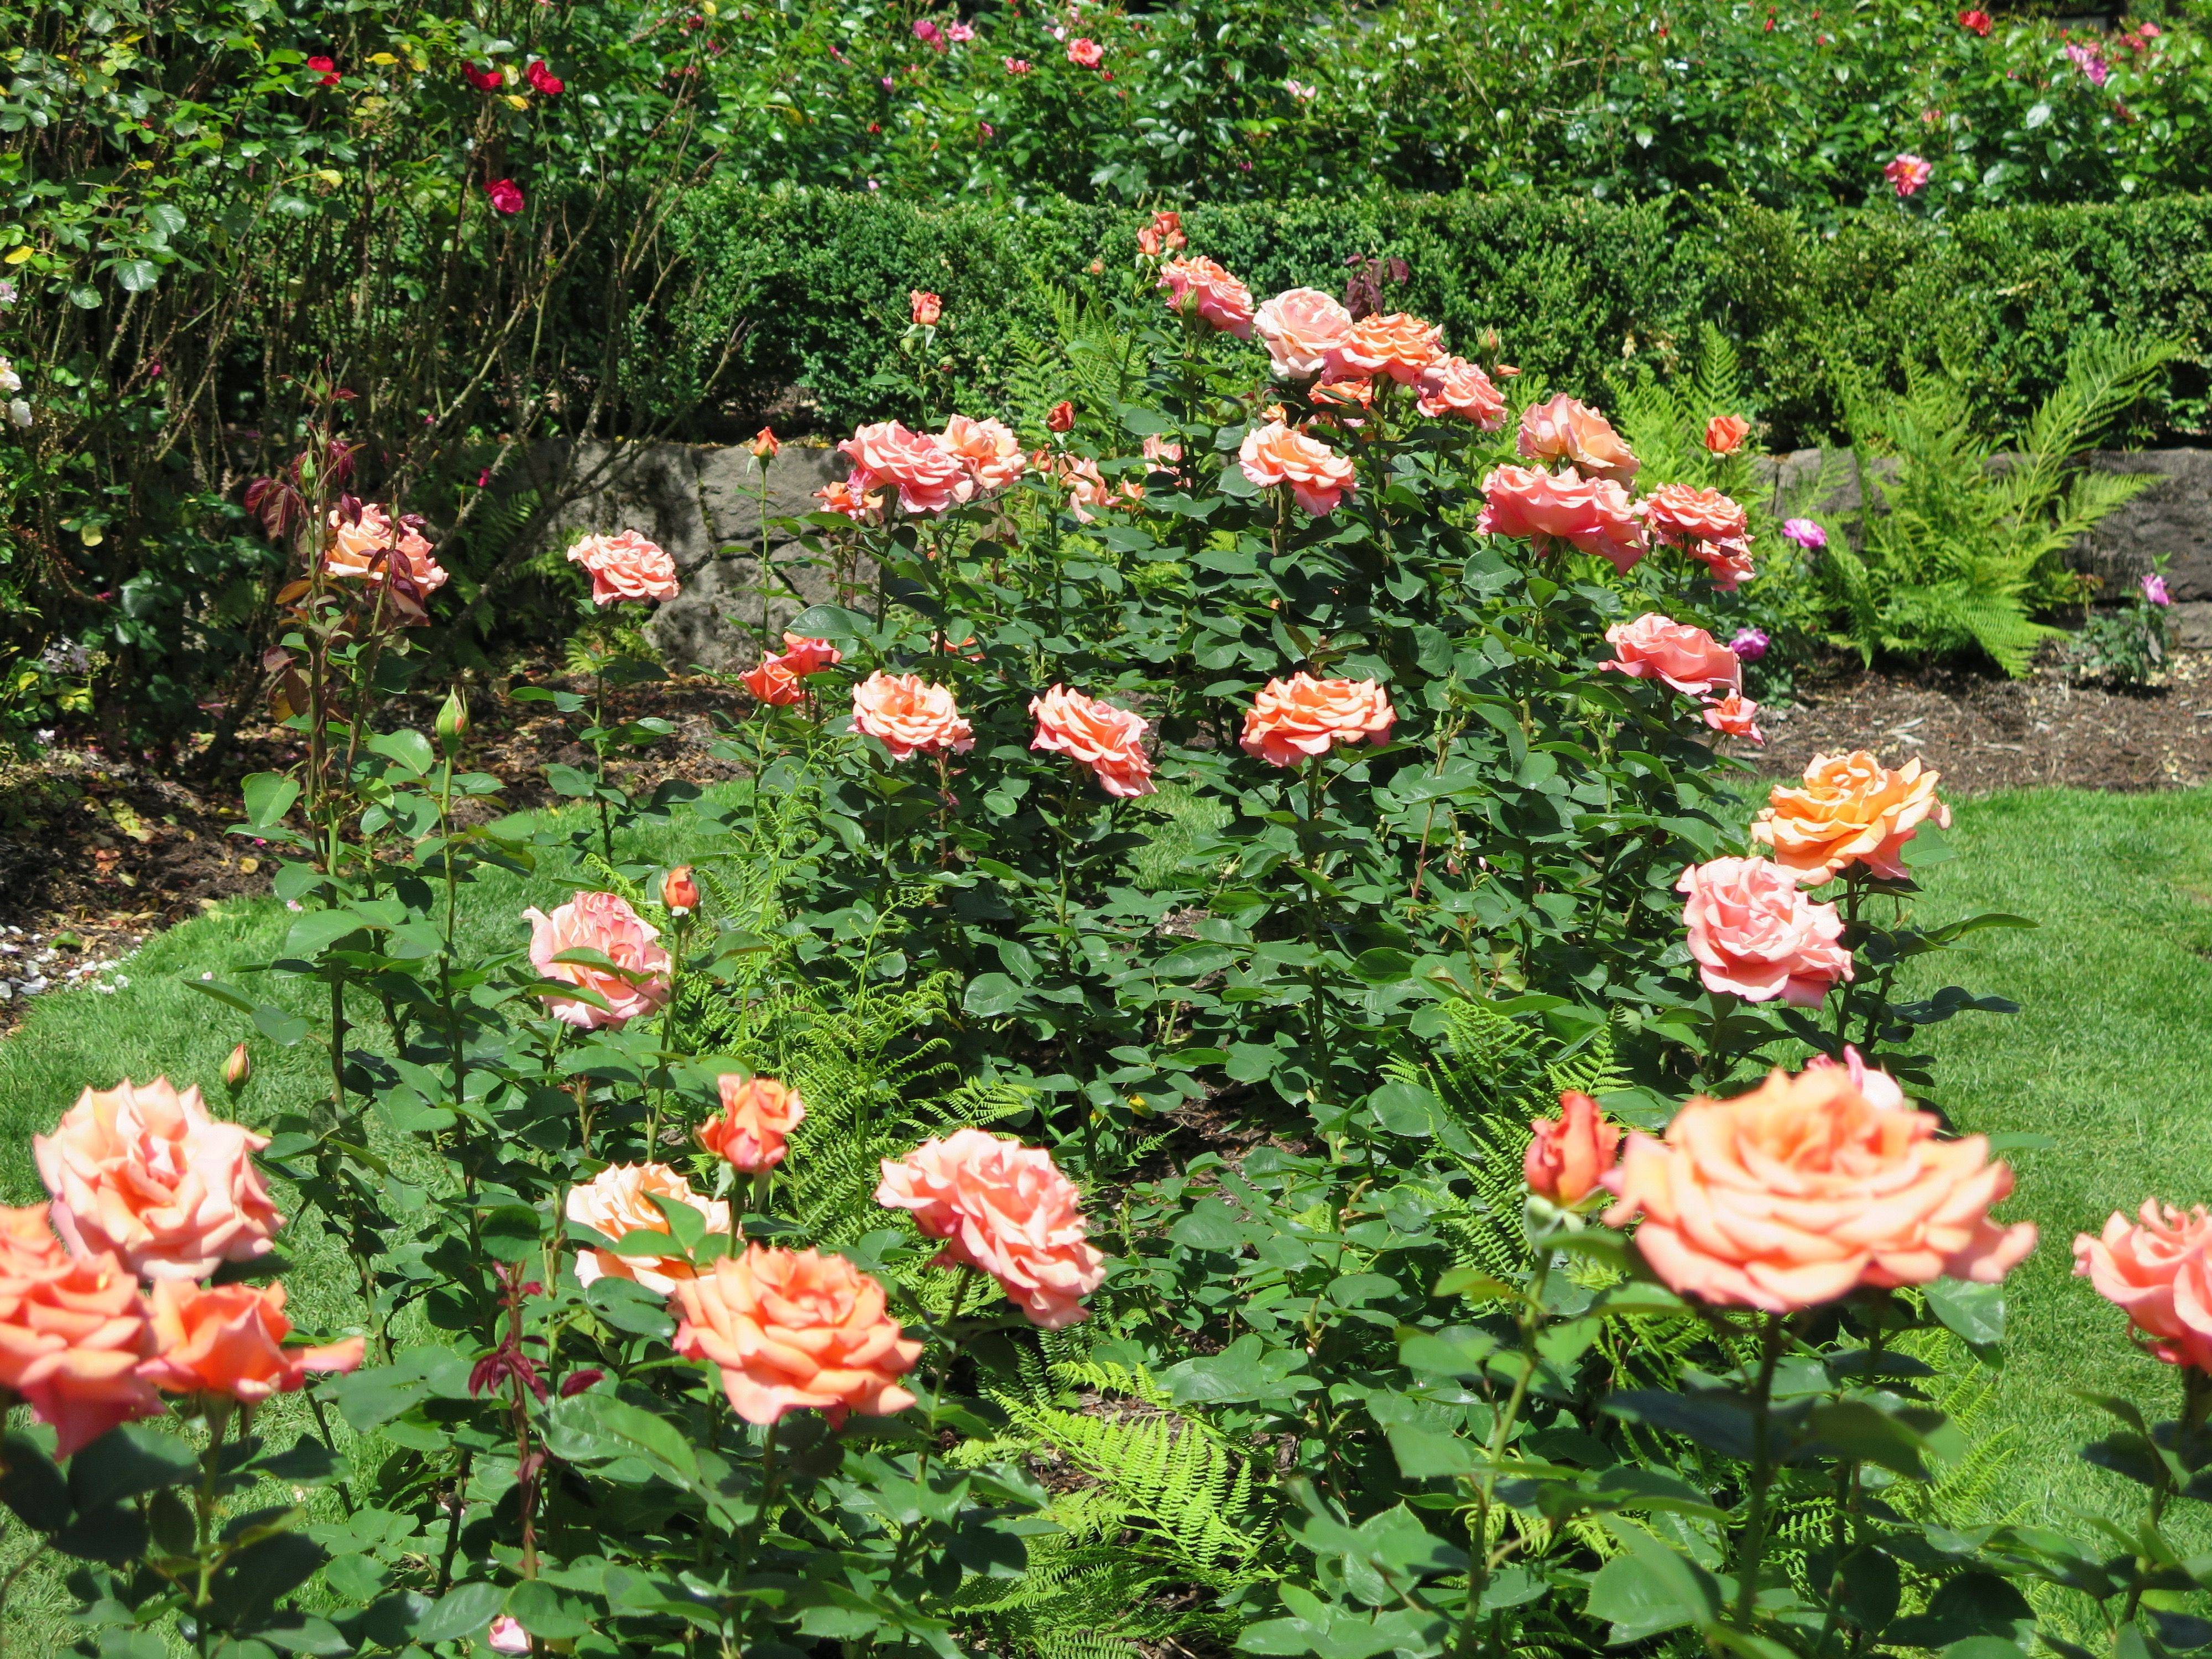 Portlands International Rose Test Garden